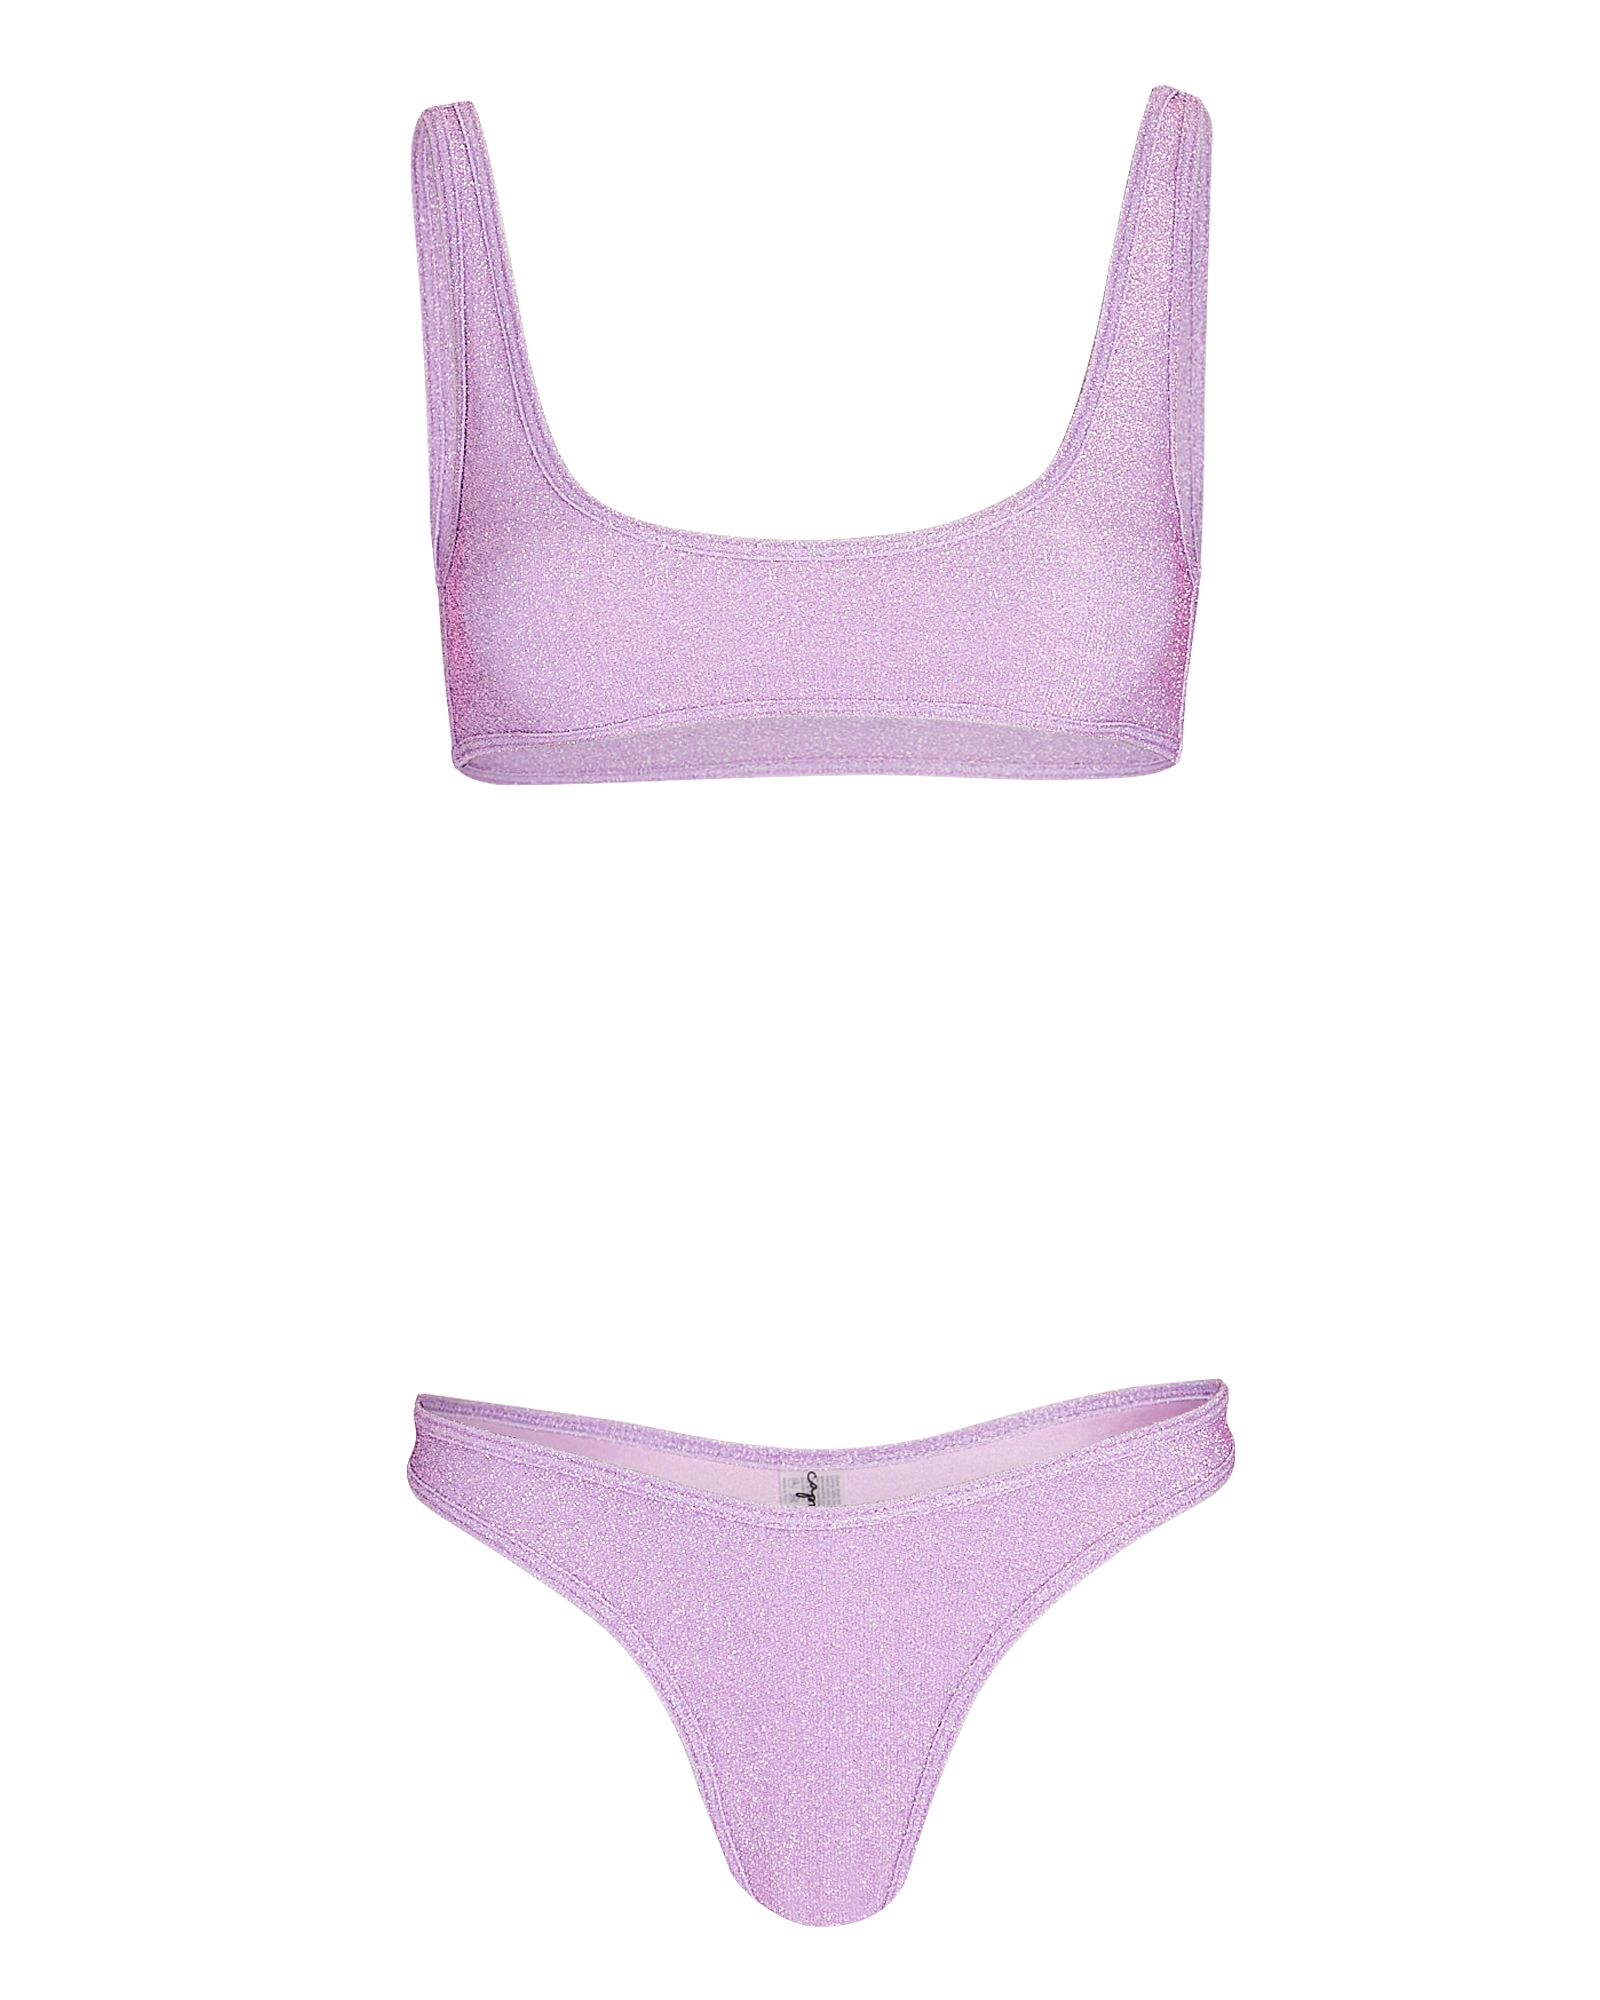 Capittana Natalie Lurex Bikini Set | INTERMIX®